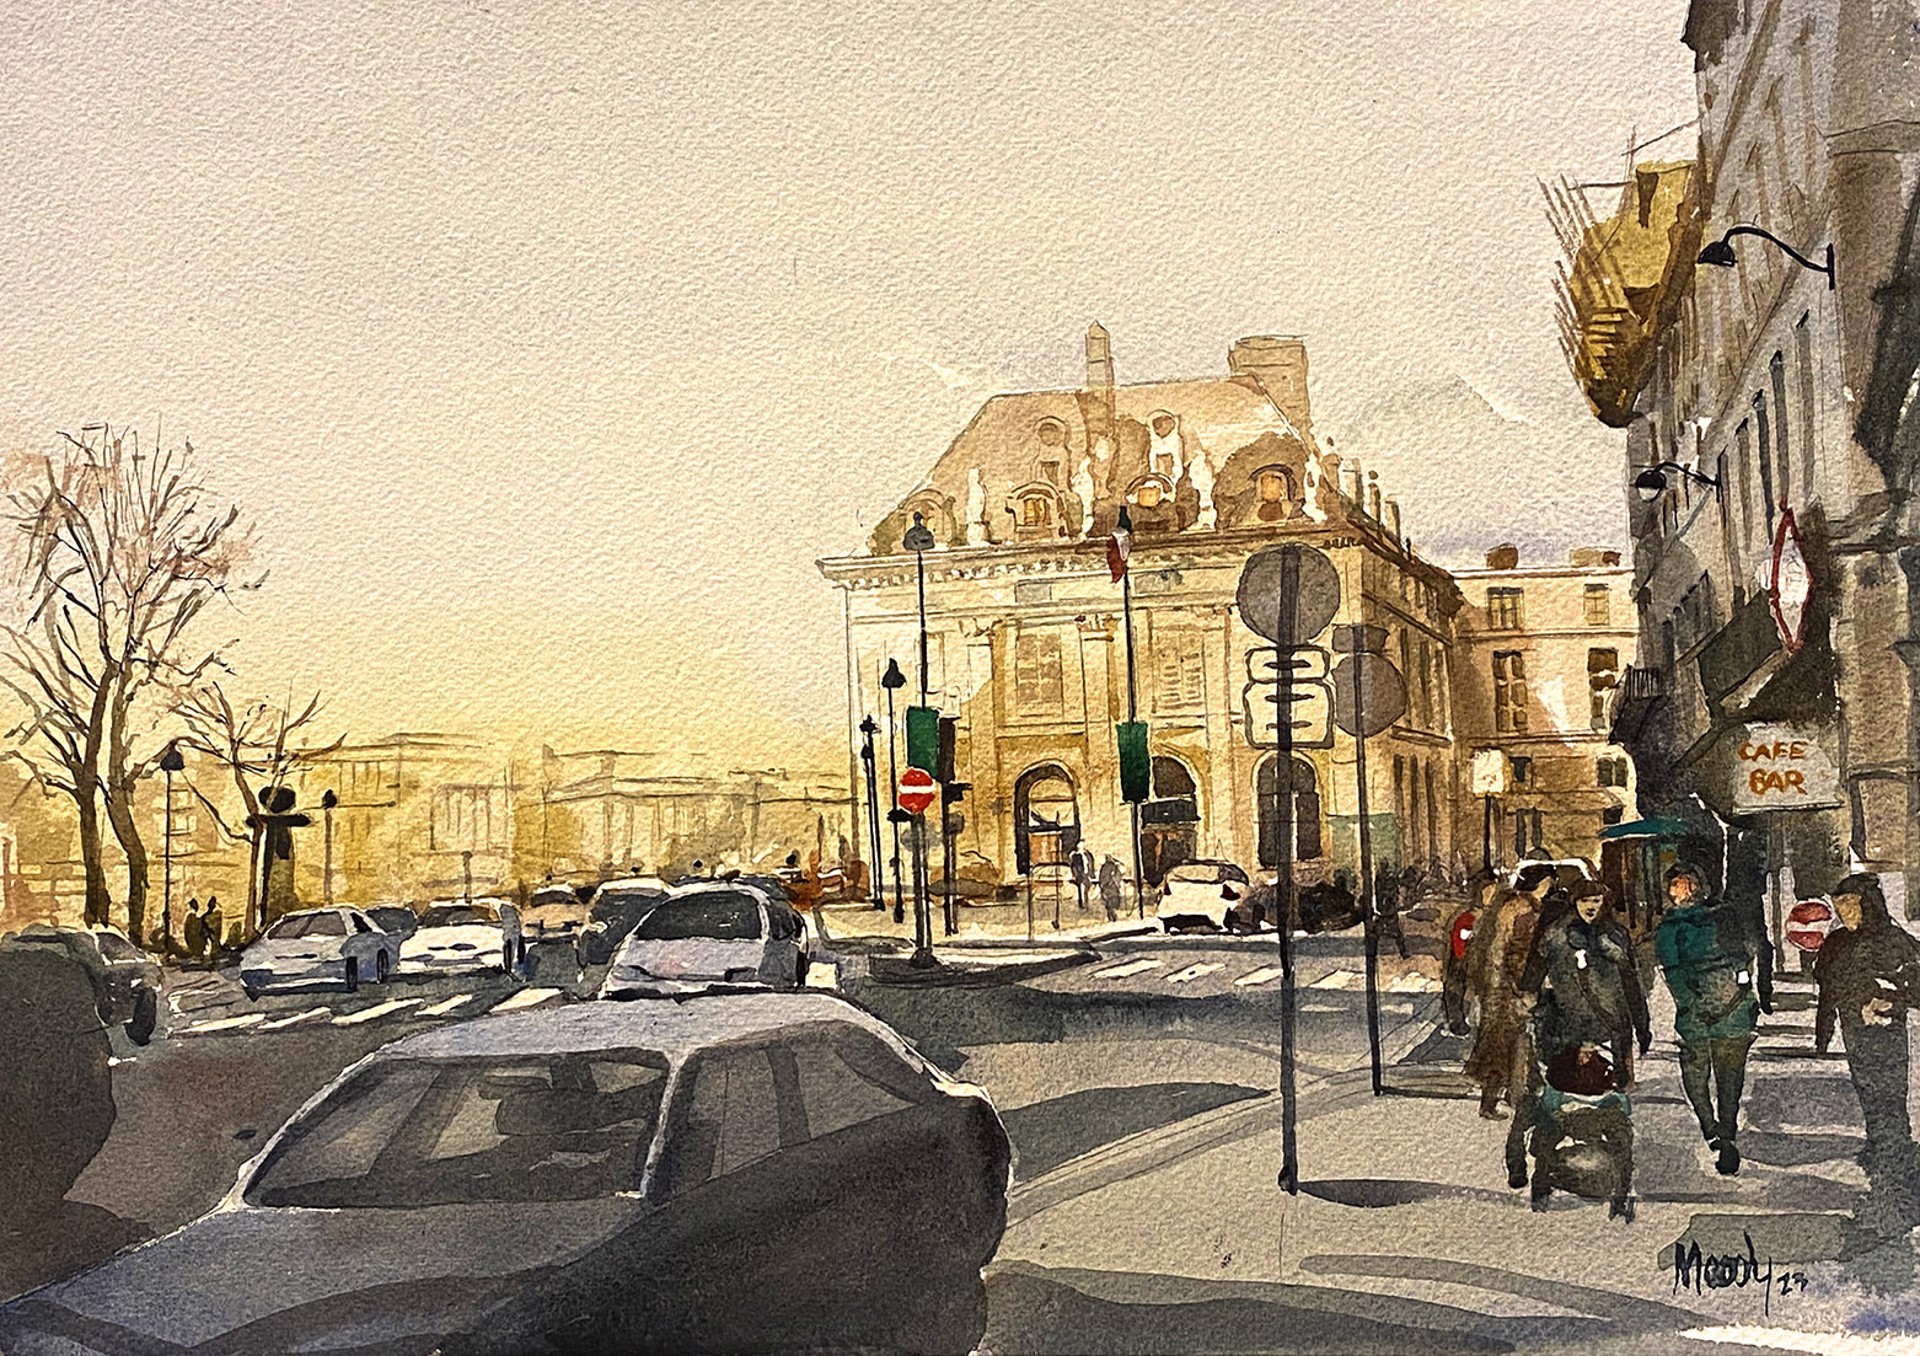 Paris Street Scene I by Bob Moody